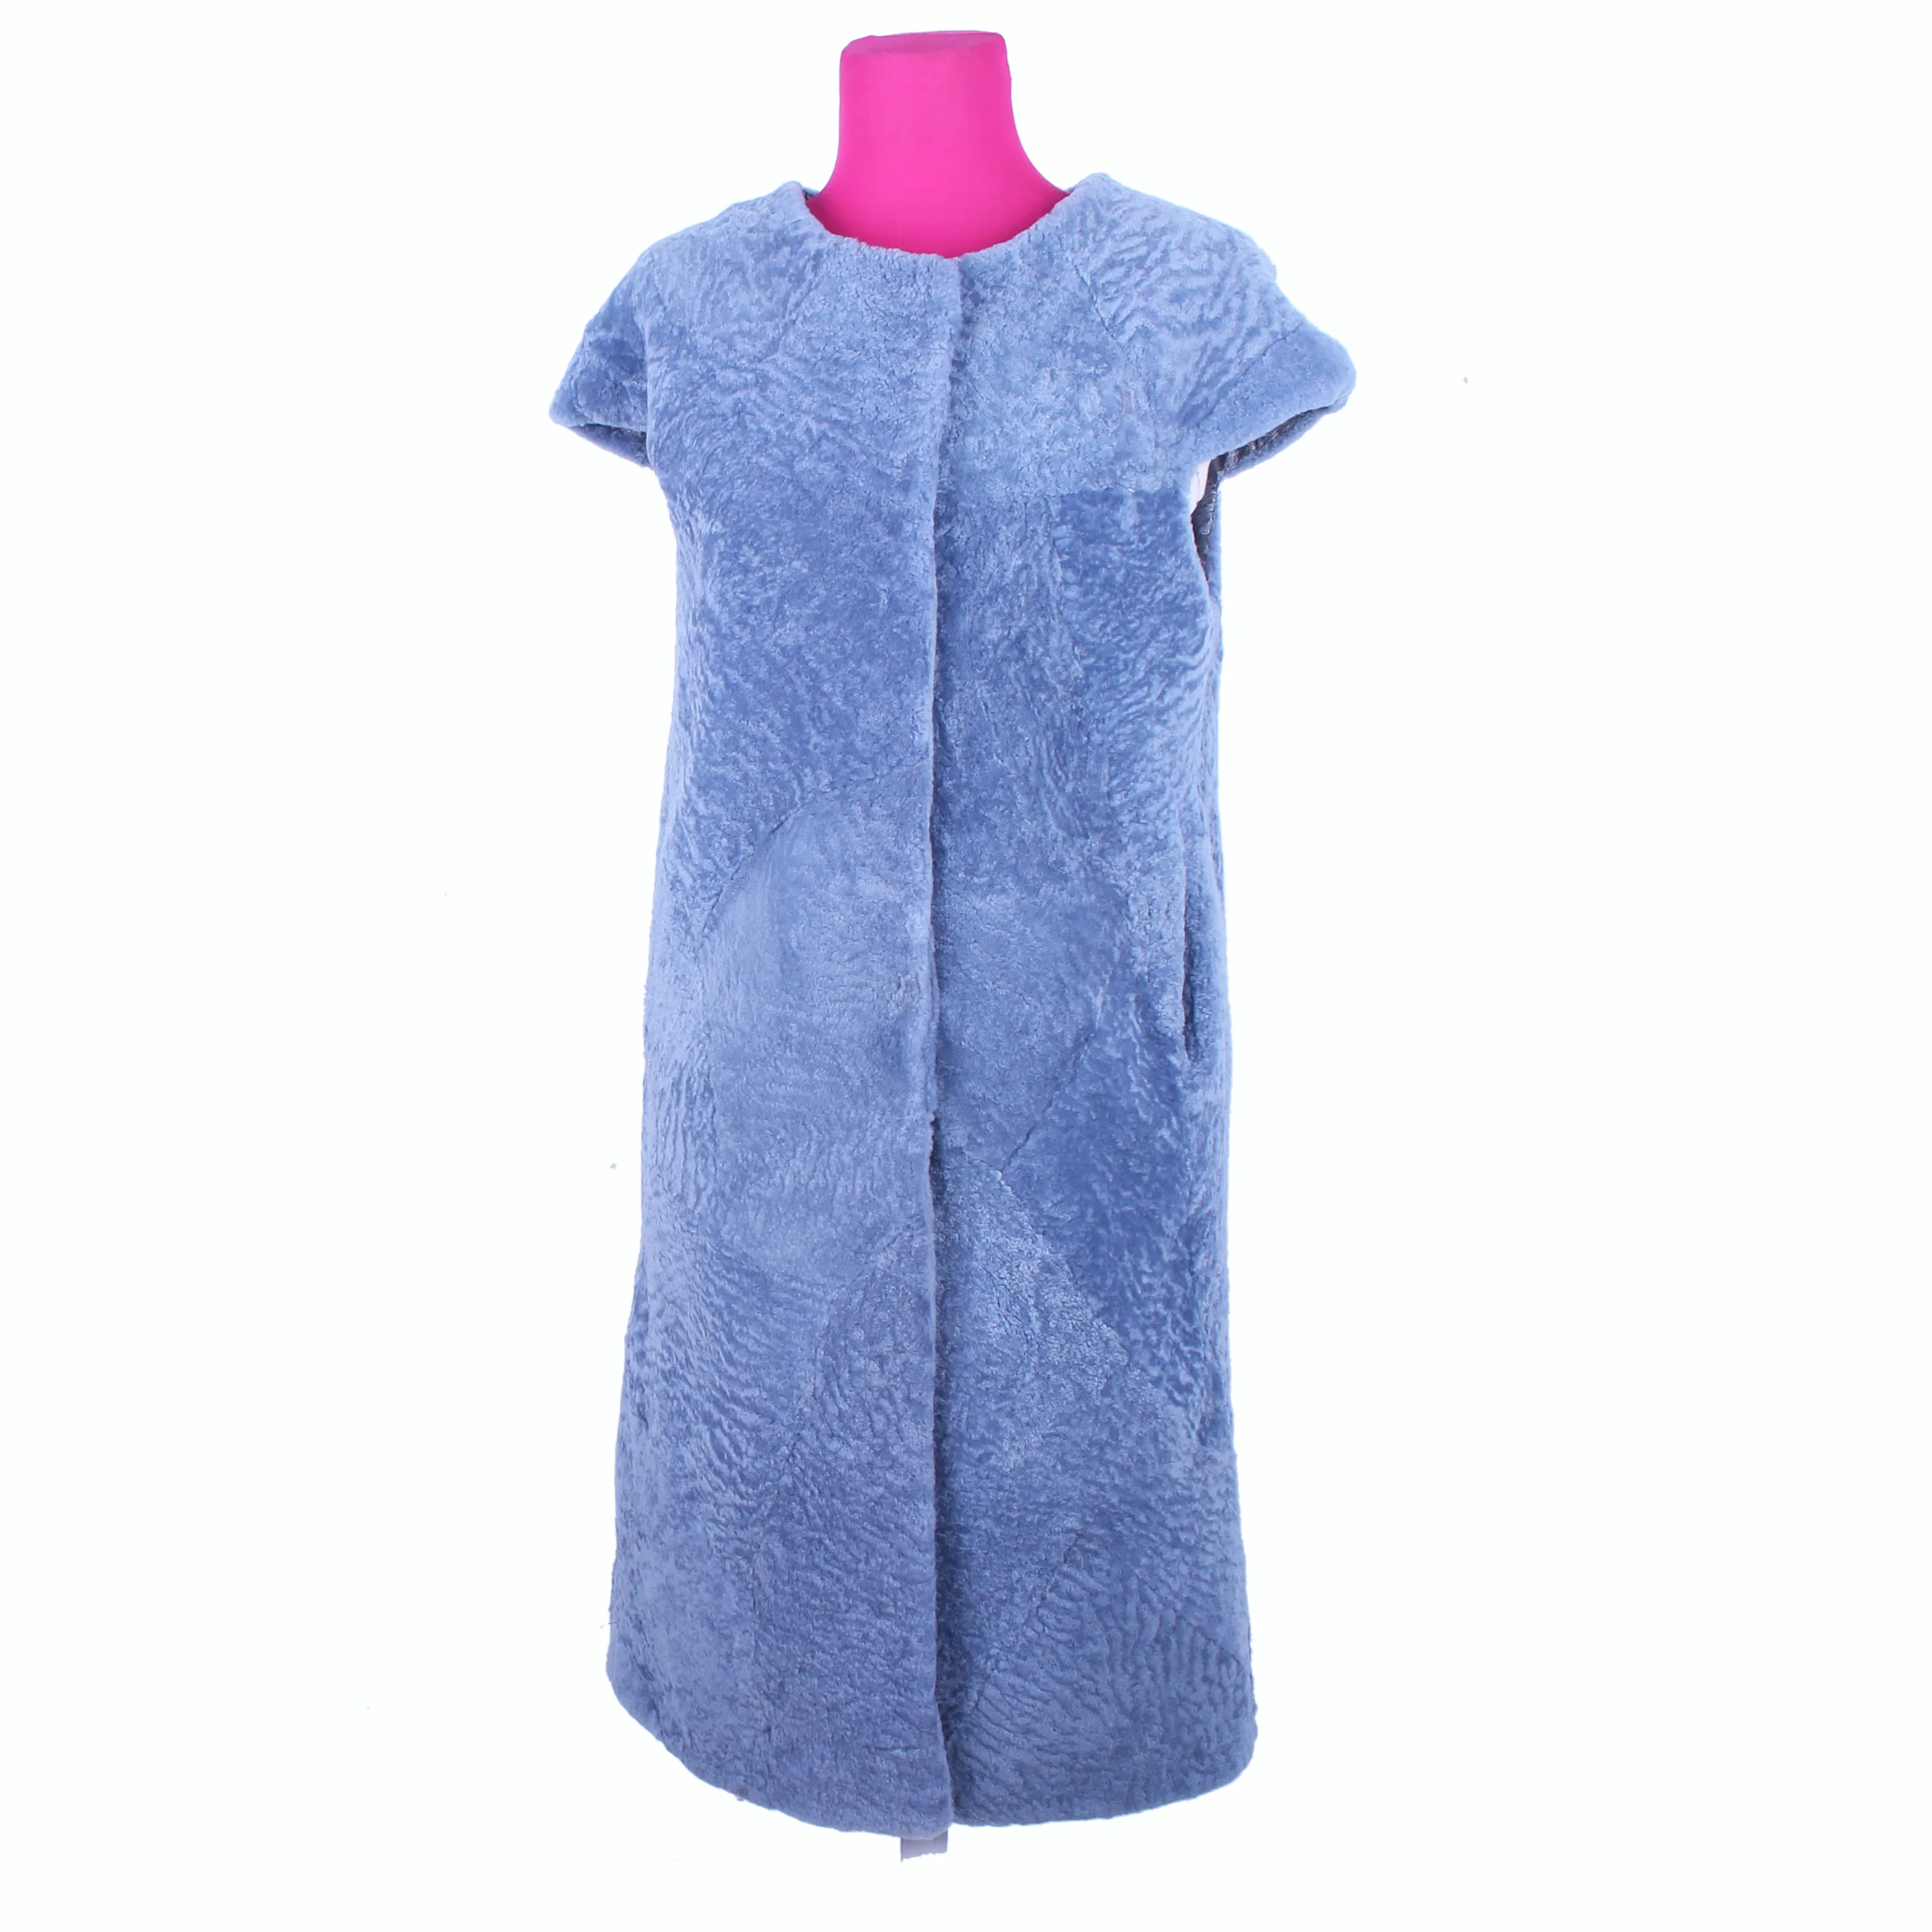 Linhaoshengyue  Fashion Women Sheep's Cashmere Real Fur Vest   Big Shoulder